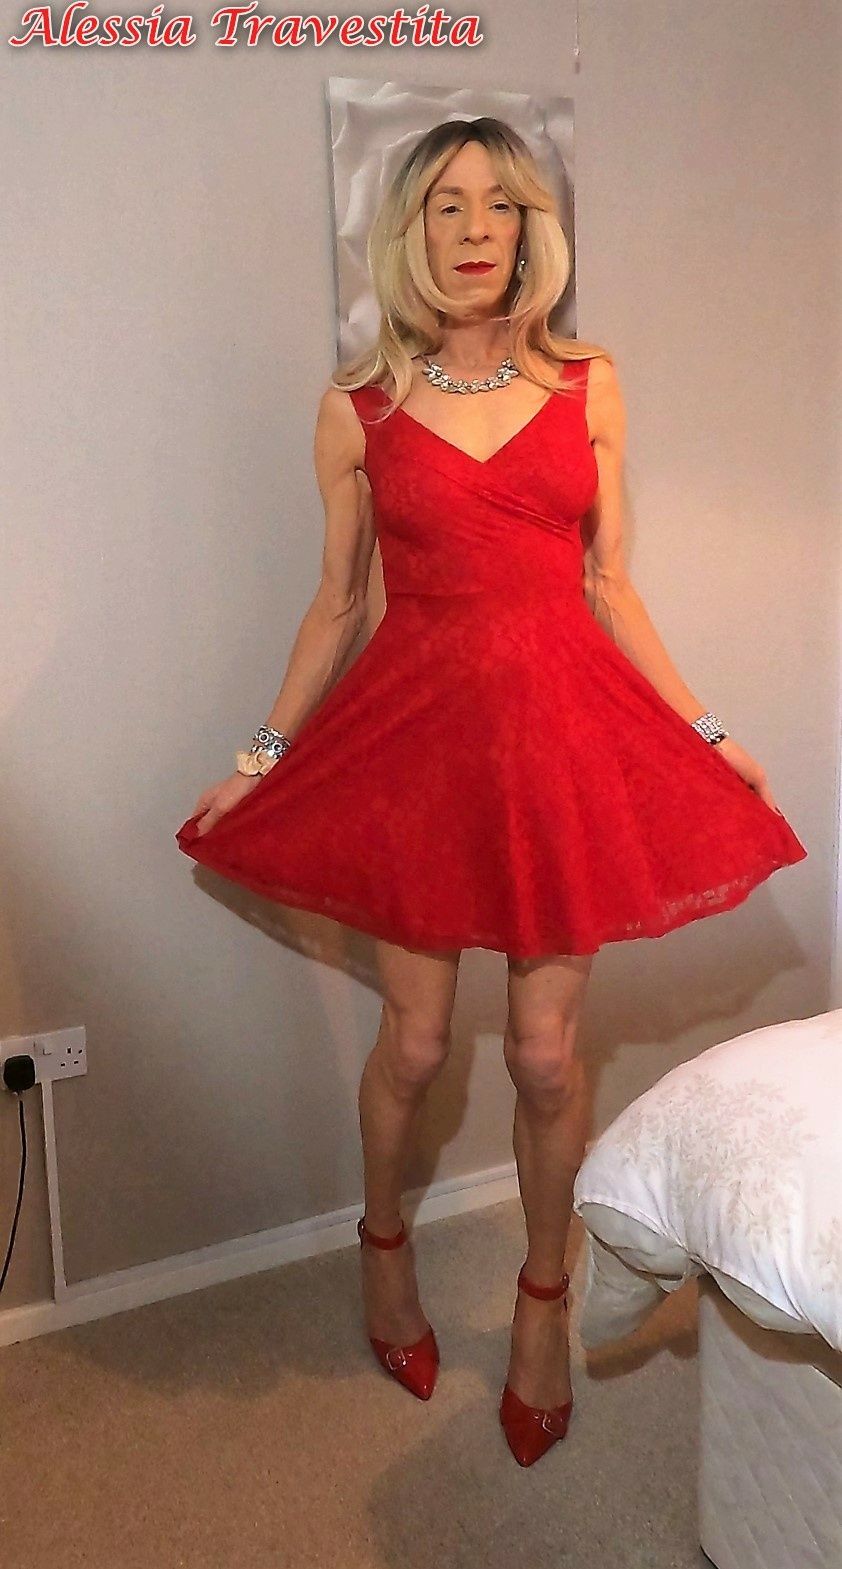 65 Alessia Travestita in Flirty Red Dress #19